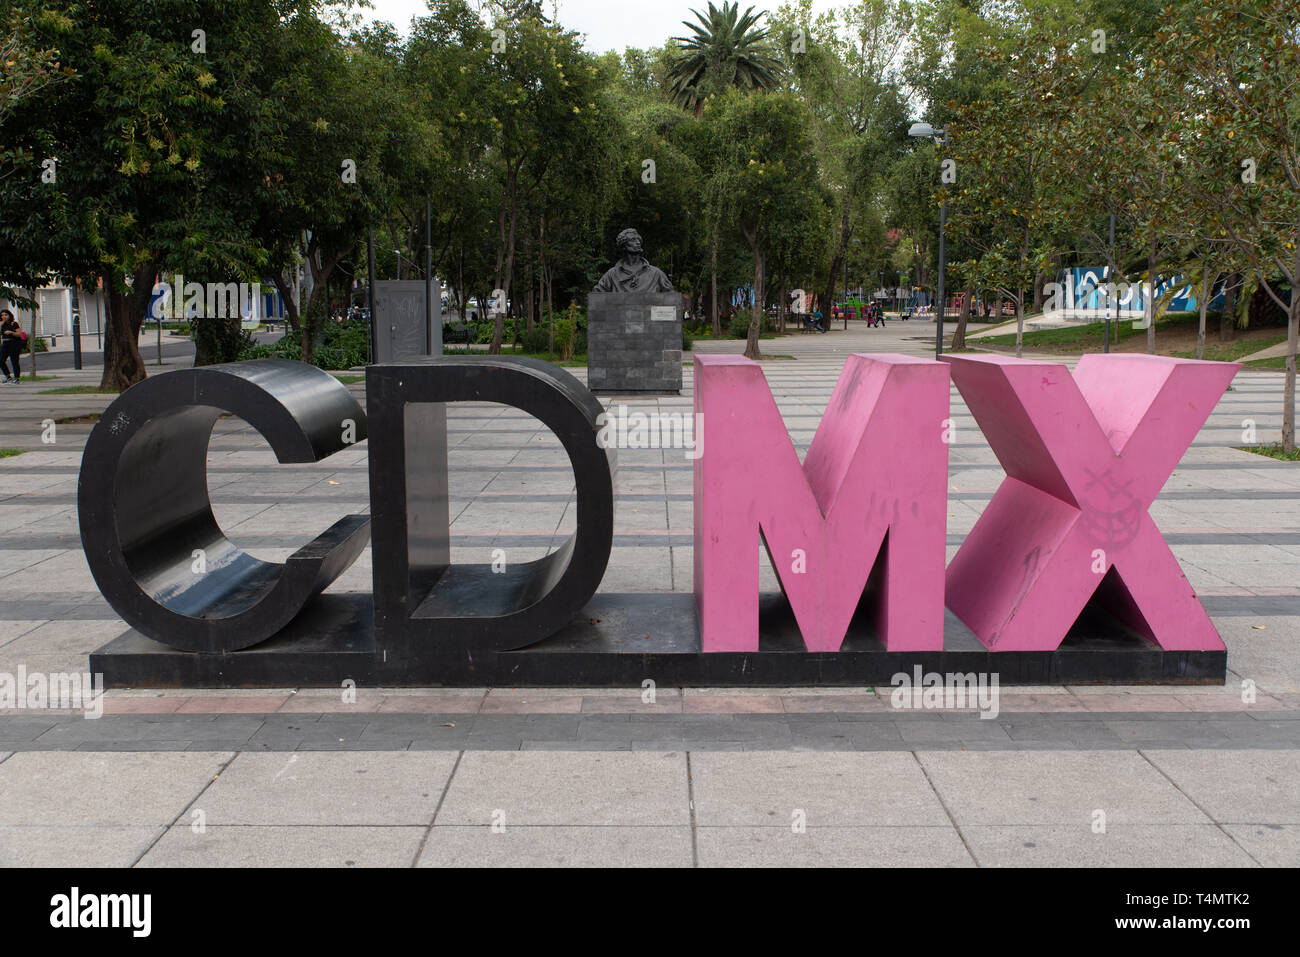 Das Zeichen CDMX, era Ciudad de Mexico bedeutet, ist der Neue Name, der 2016 den Begriff "MESSICO D.F' ersetzte. / Il segno CDMX, che significa Ciudad de Foto Stock